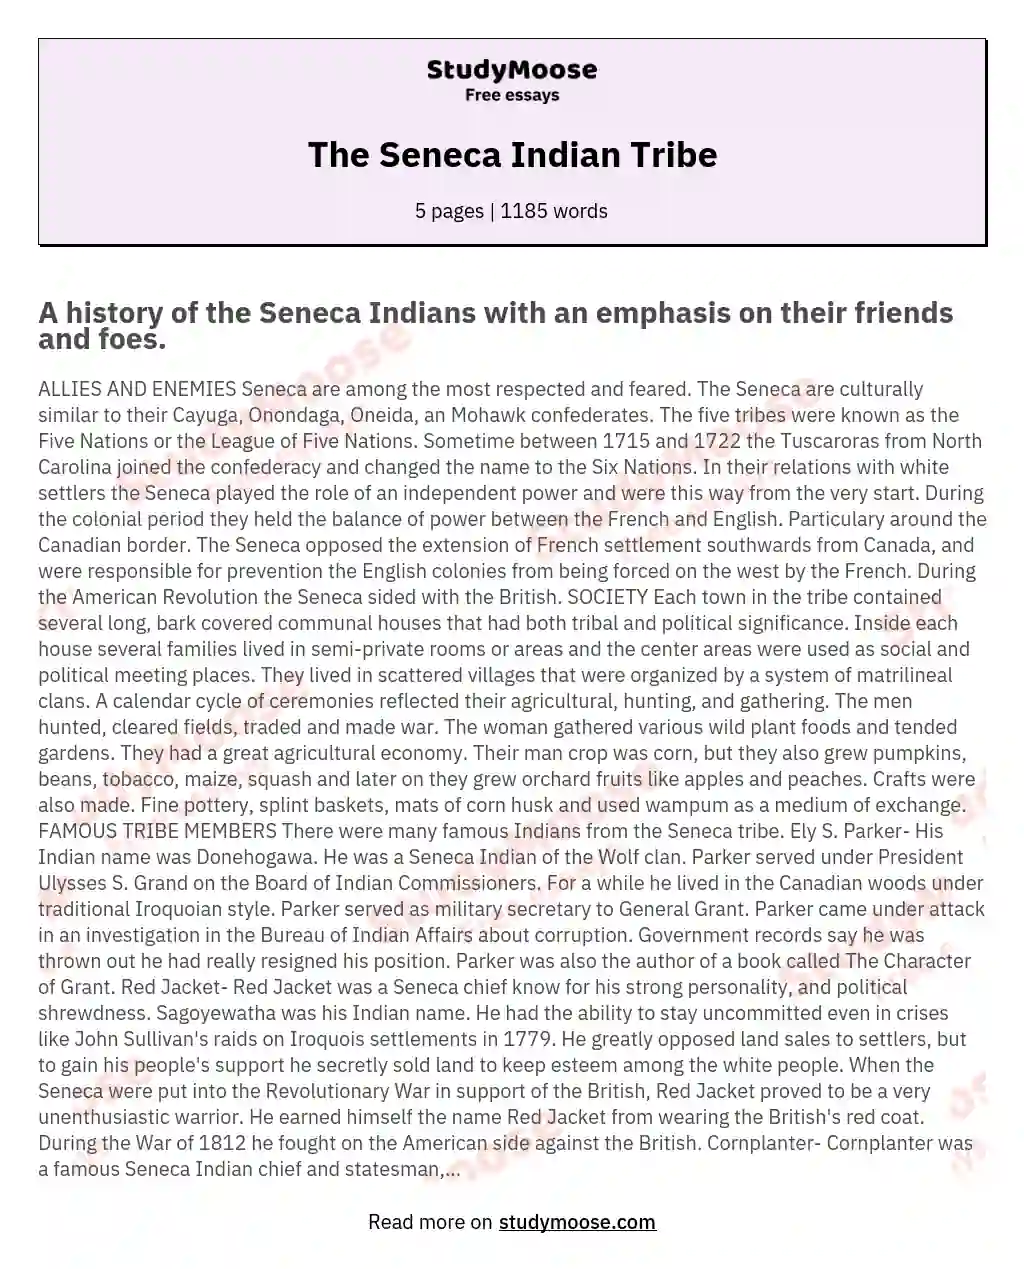 The Seneca Indian Tribe essay